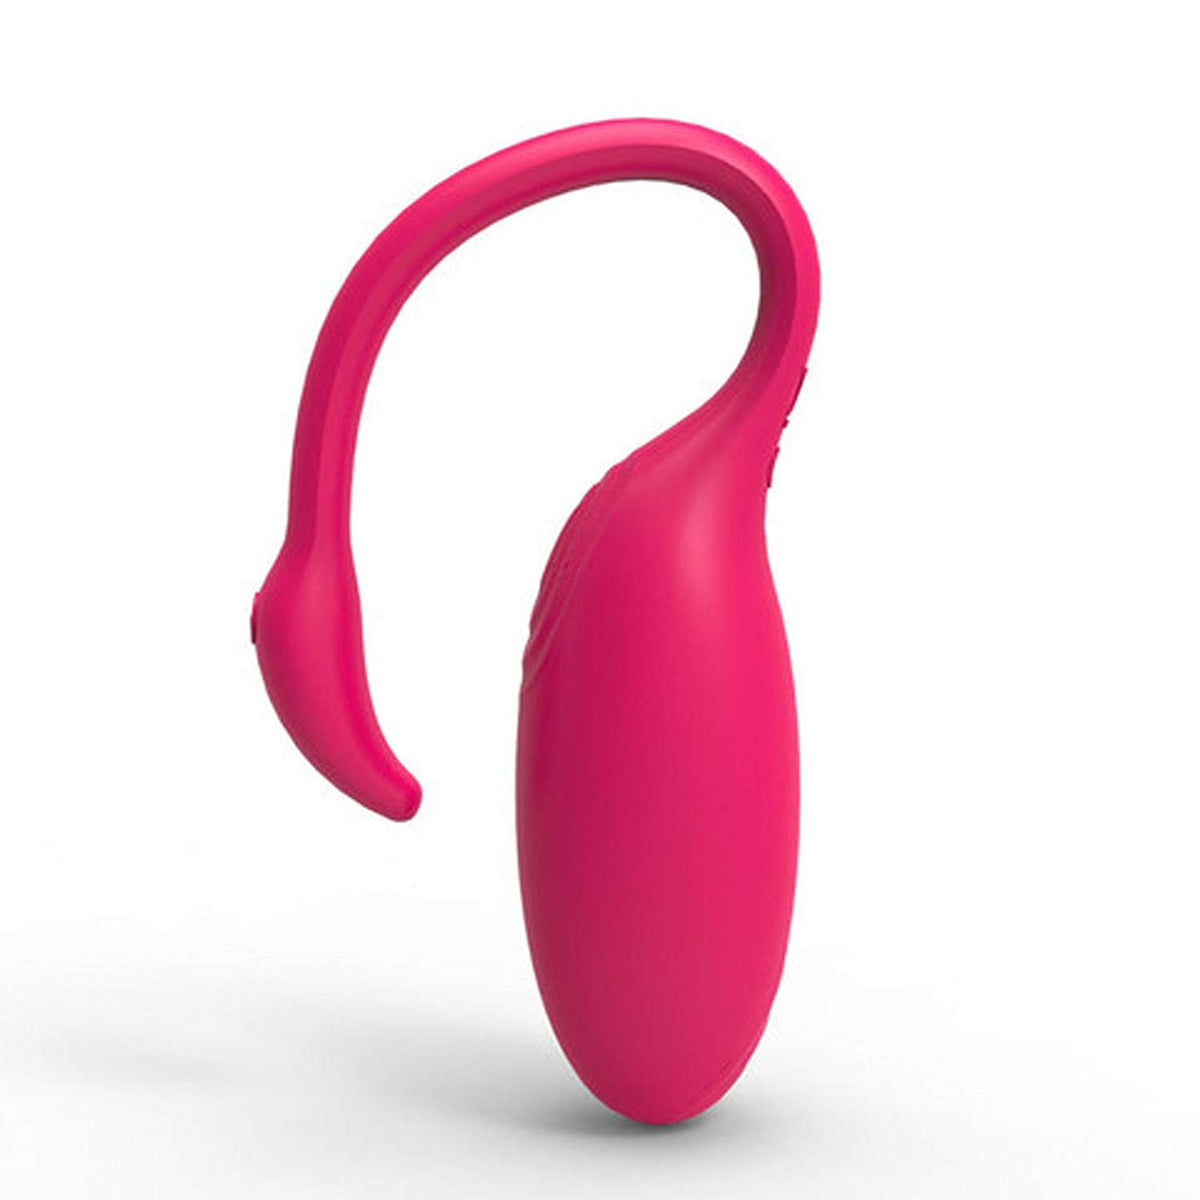 Magic Motion Flamingo Wearable Bullet Vibrator APP & Music Remote Control